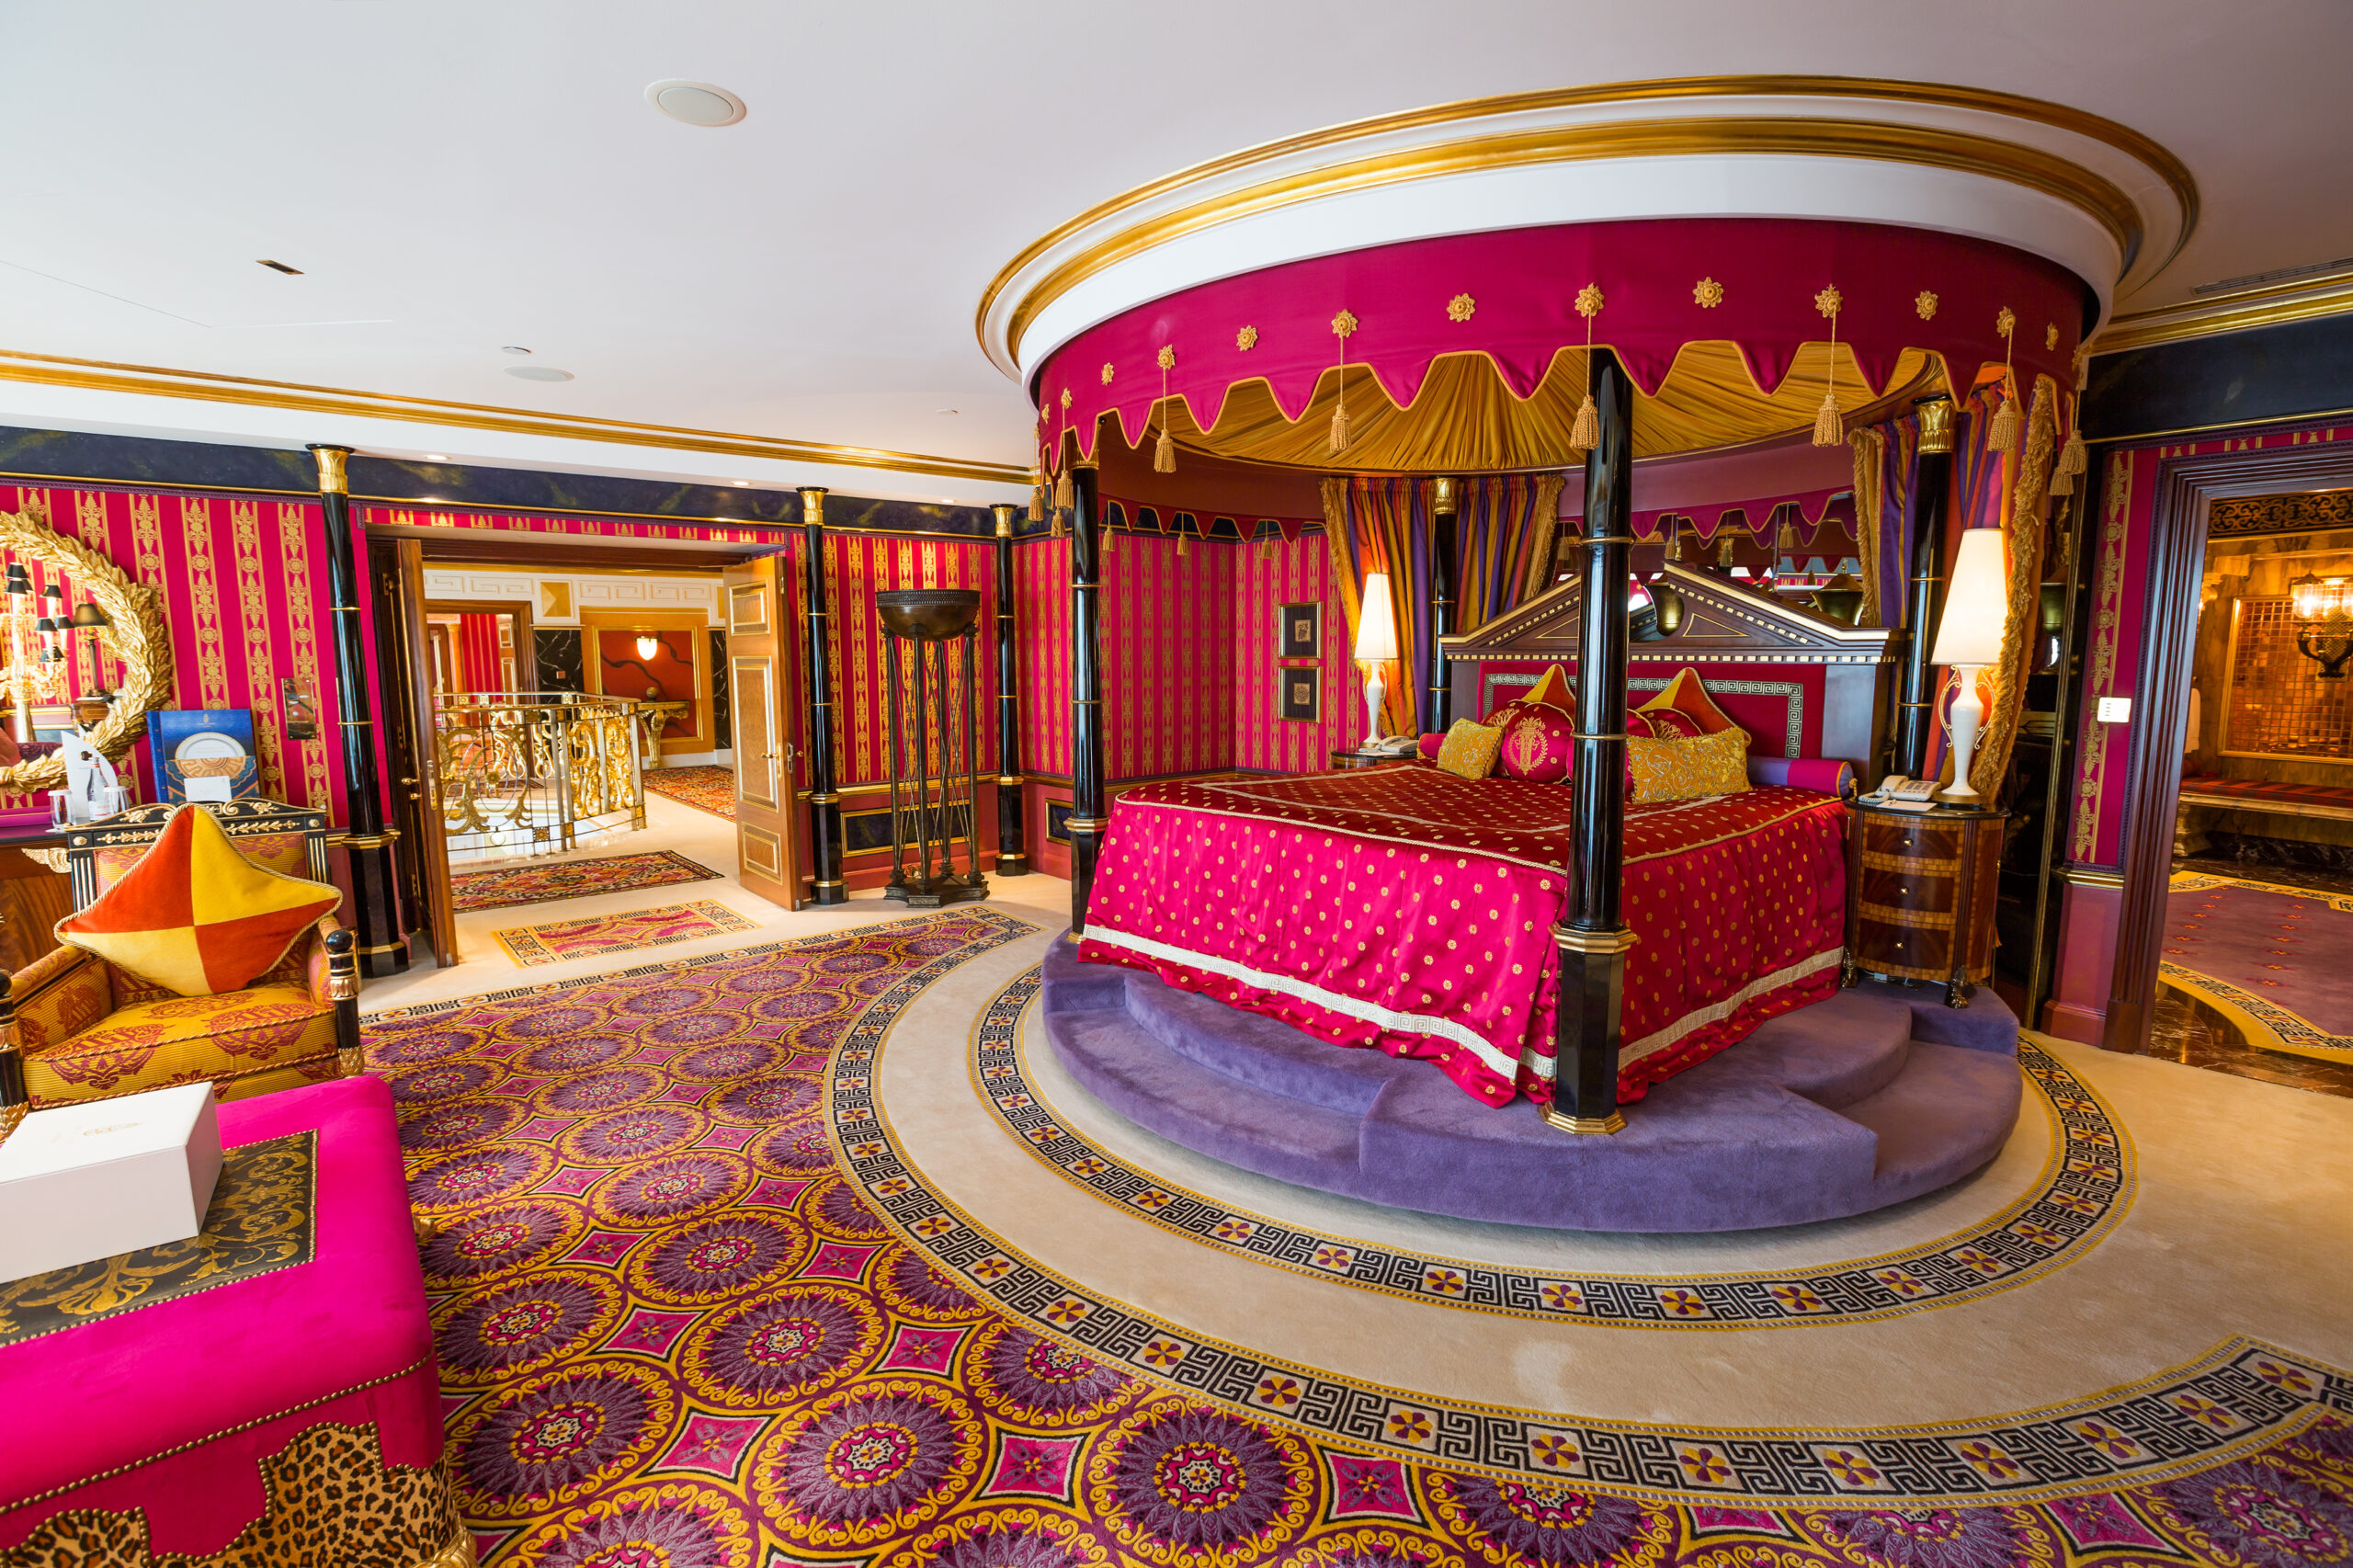 Burj Al Arab - The Royal Suite